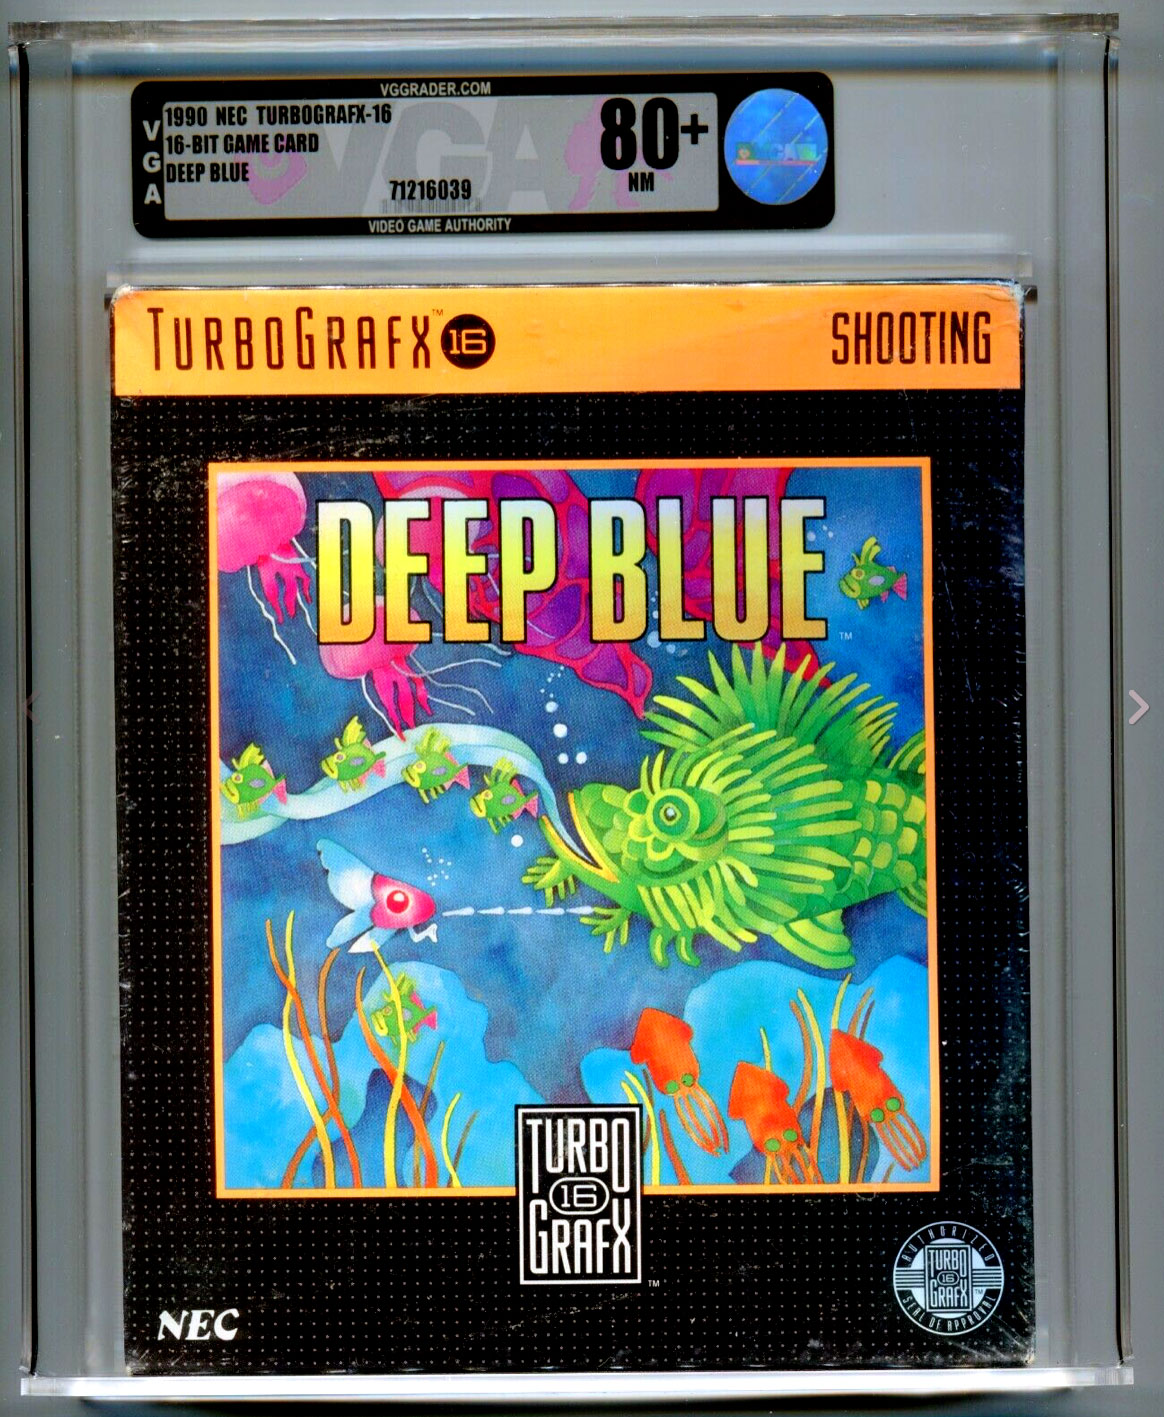 VGA 80+ Deep Blue. Harpoon this travesty.